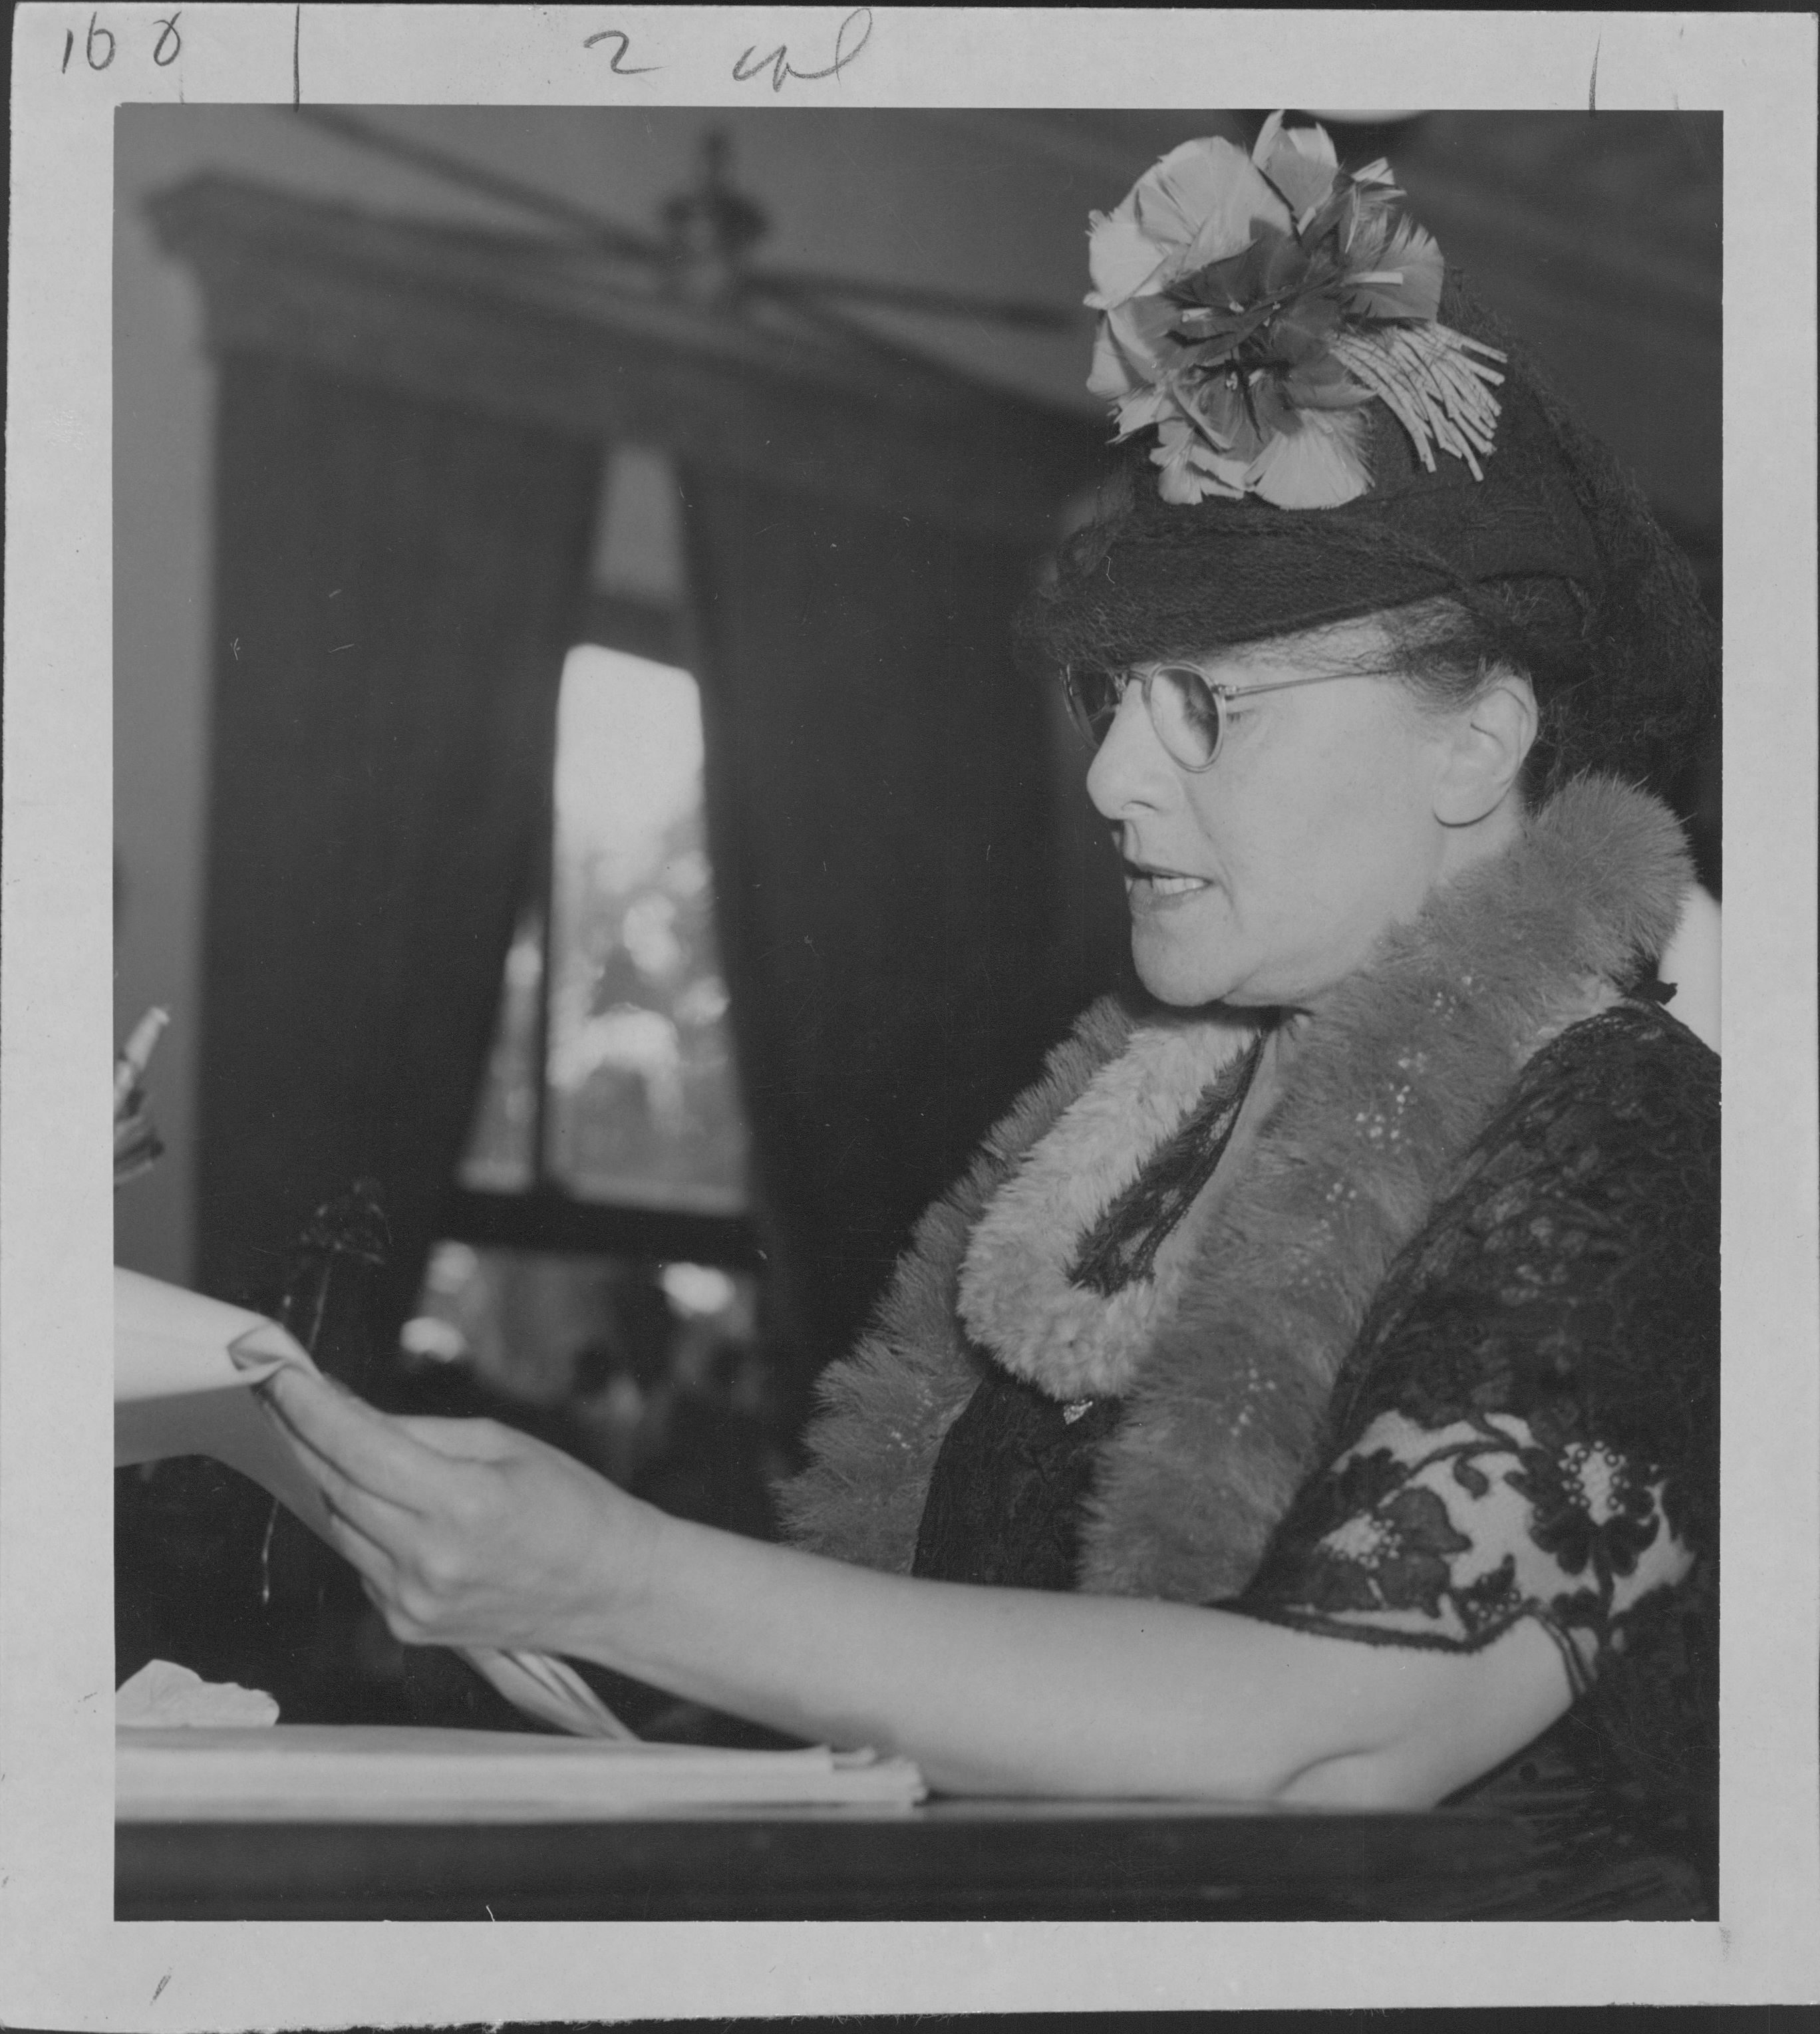 Kamokila presents her testimony at Iolani Palace on January 17, 1946